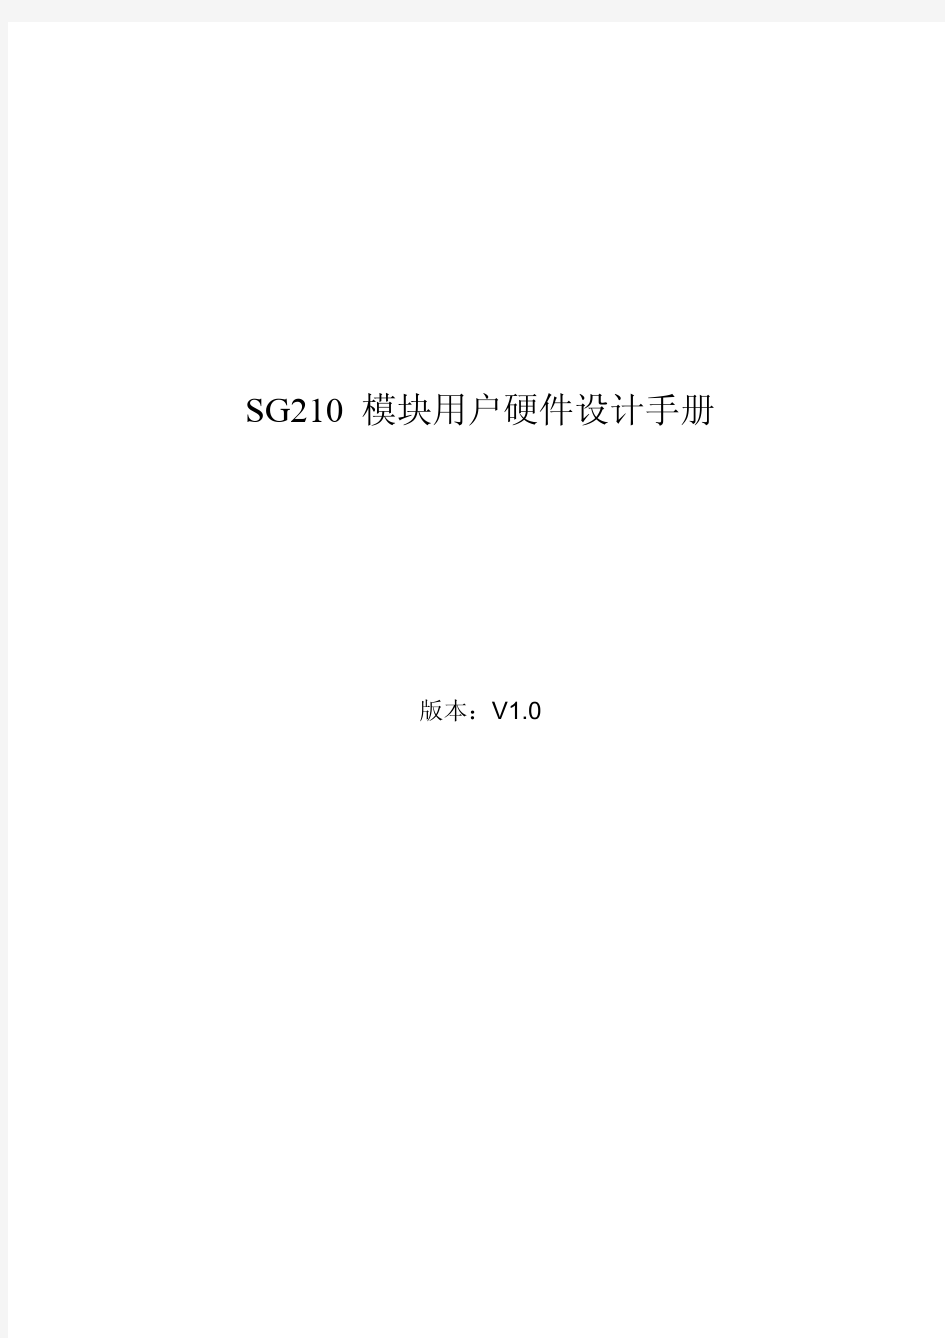 SG210 模块用户设计手册V1[1].0